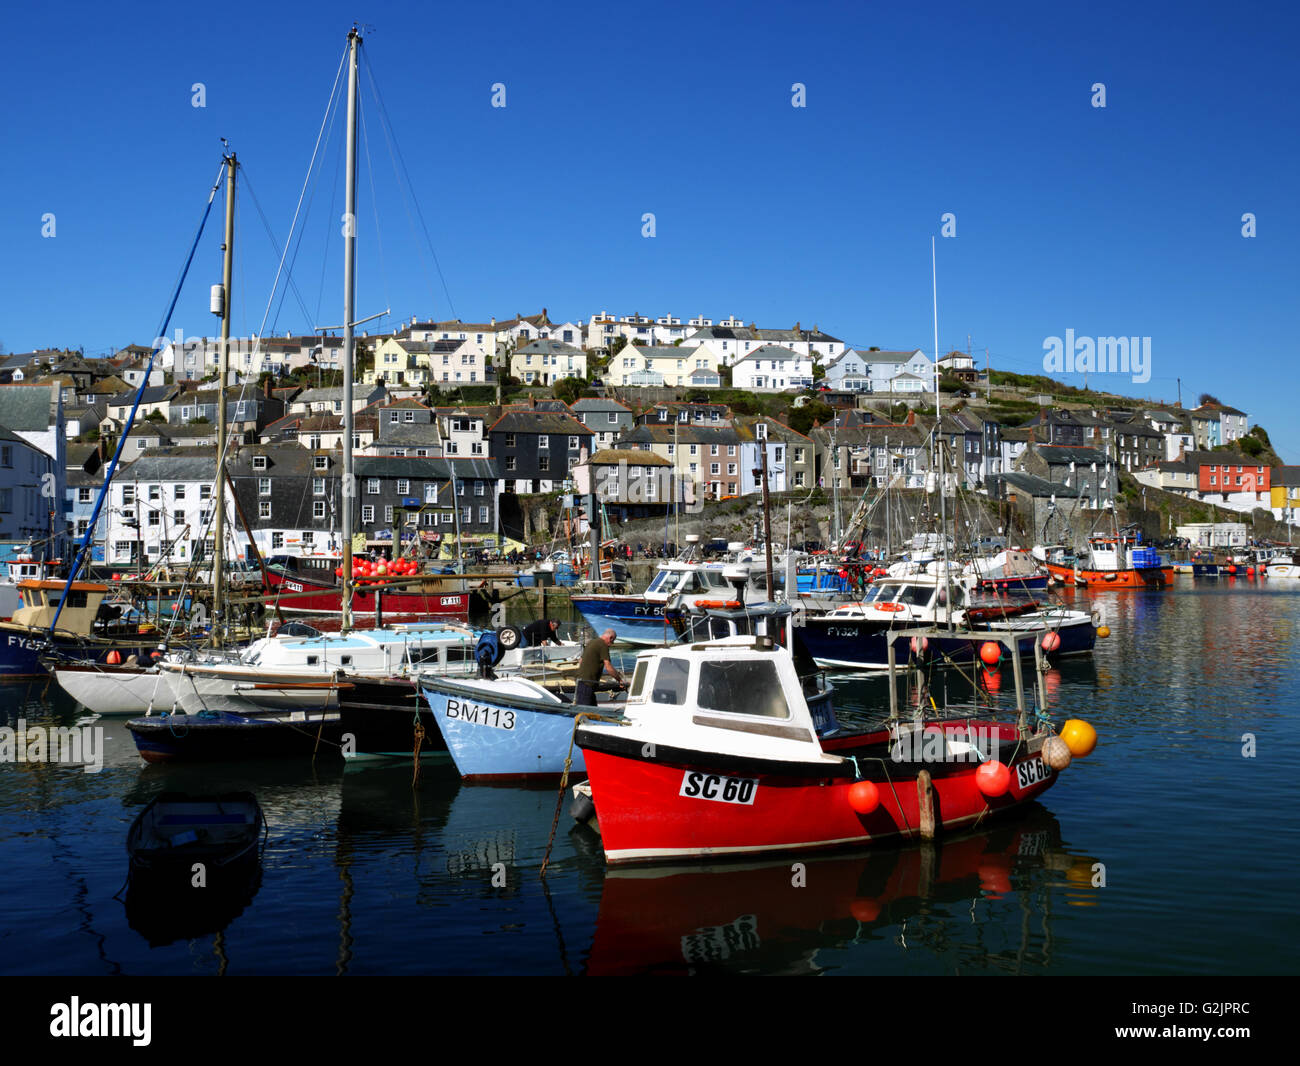 Eine Hafen-Szene mit bunten Booten vertäut am Mevagissey, Cornwall. Stockfoto